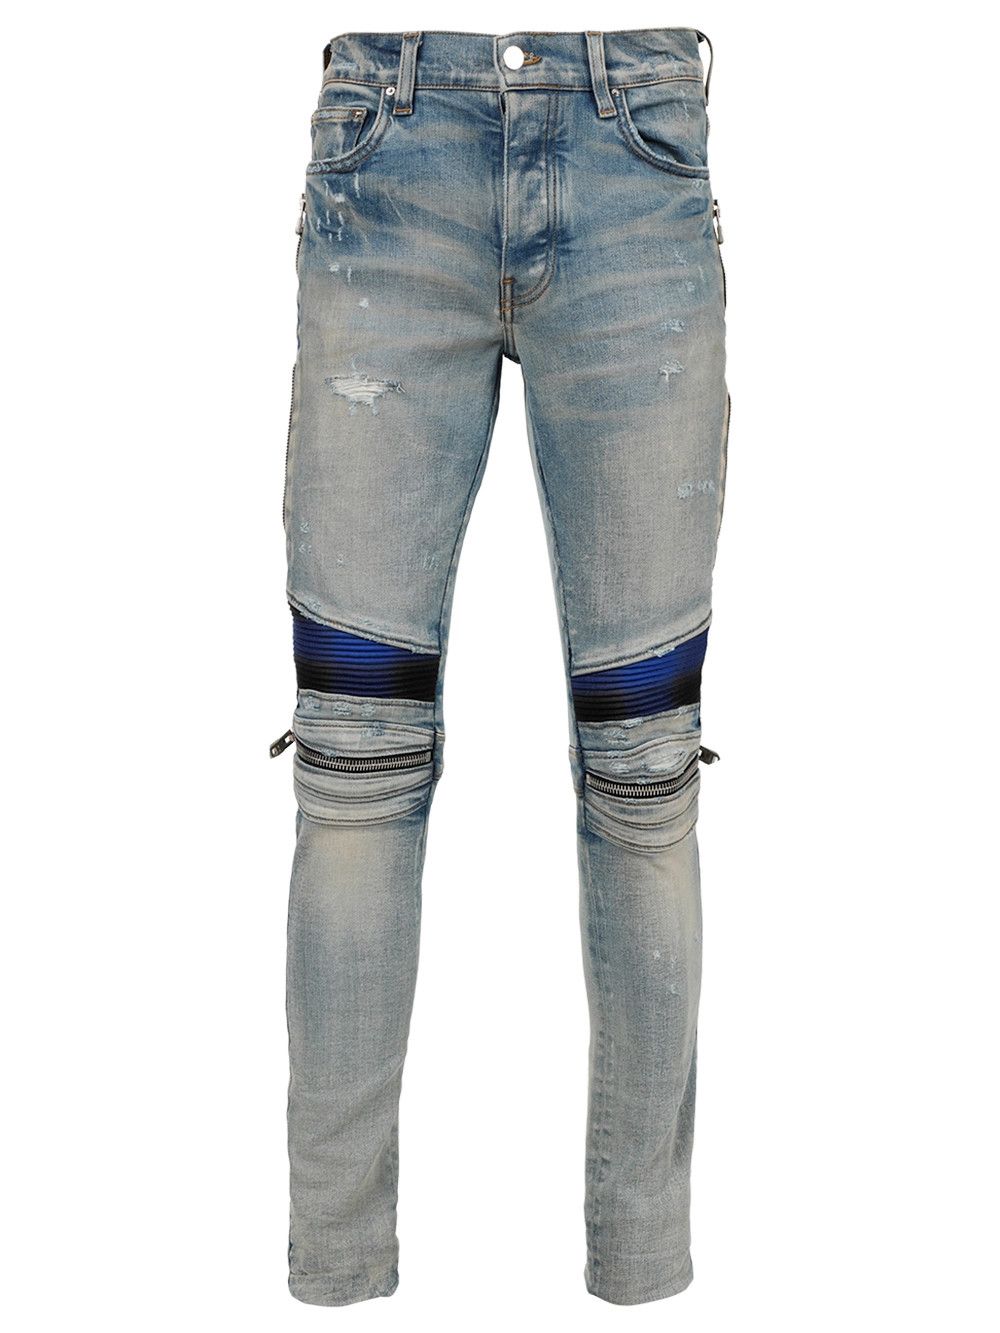 Amiri Amiri Plaid MX2 Clay Indigo Jeans | Grailed